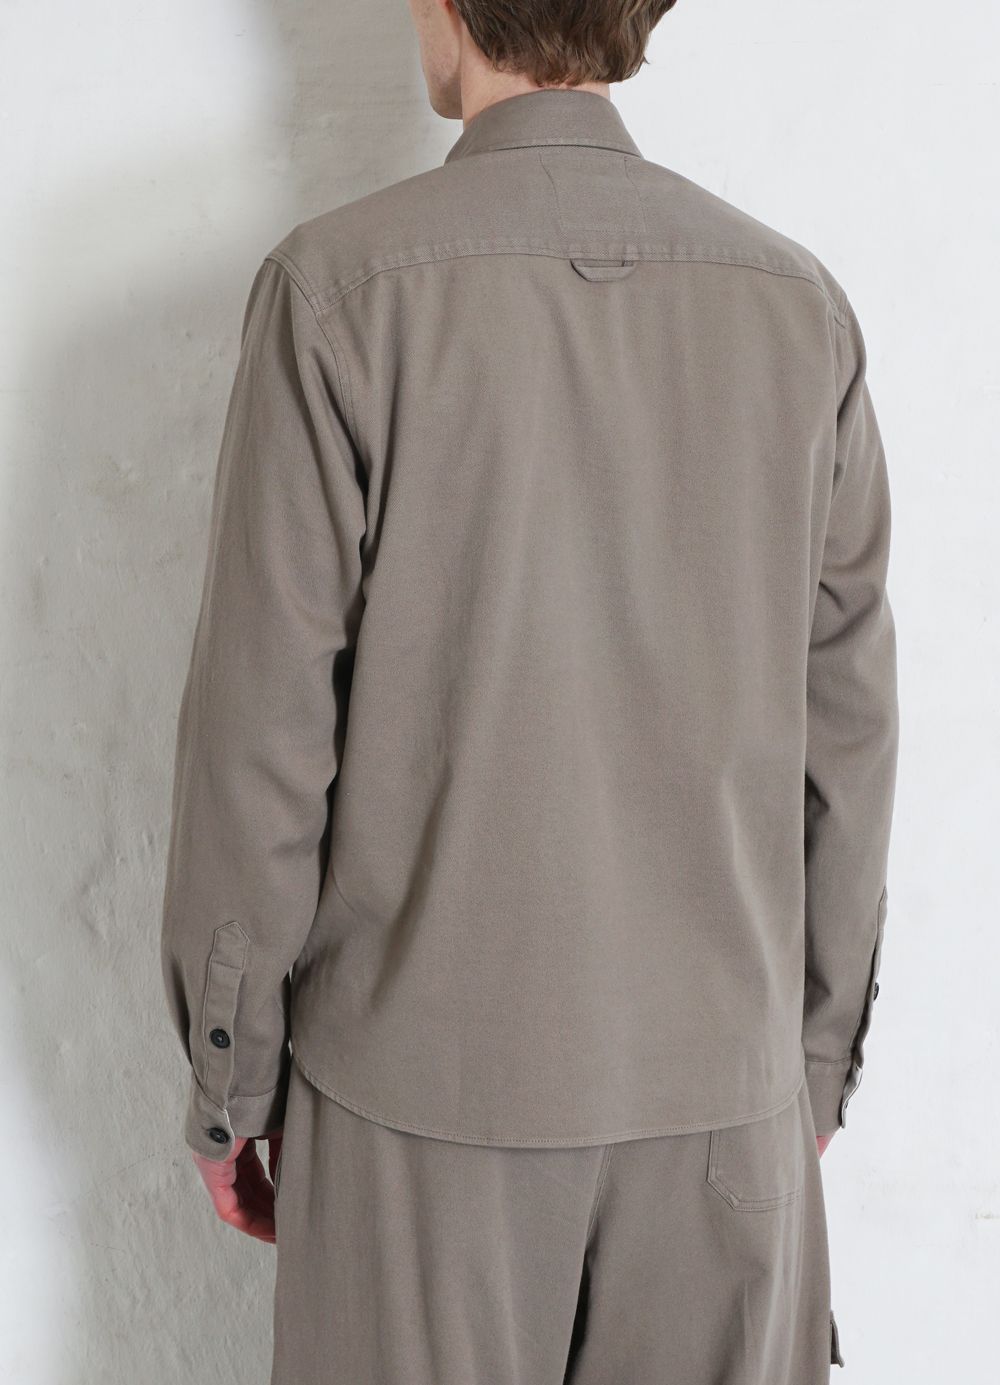 HANSEN Garments - ROBERT | Casual Pull-on Shirt | Light Grey - HANSEN Garments